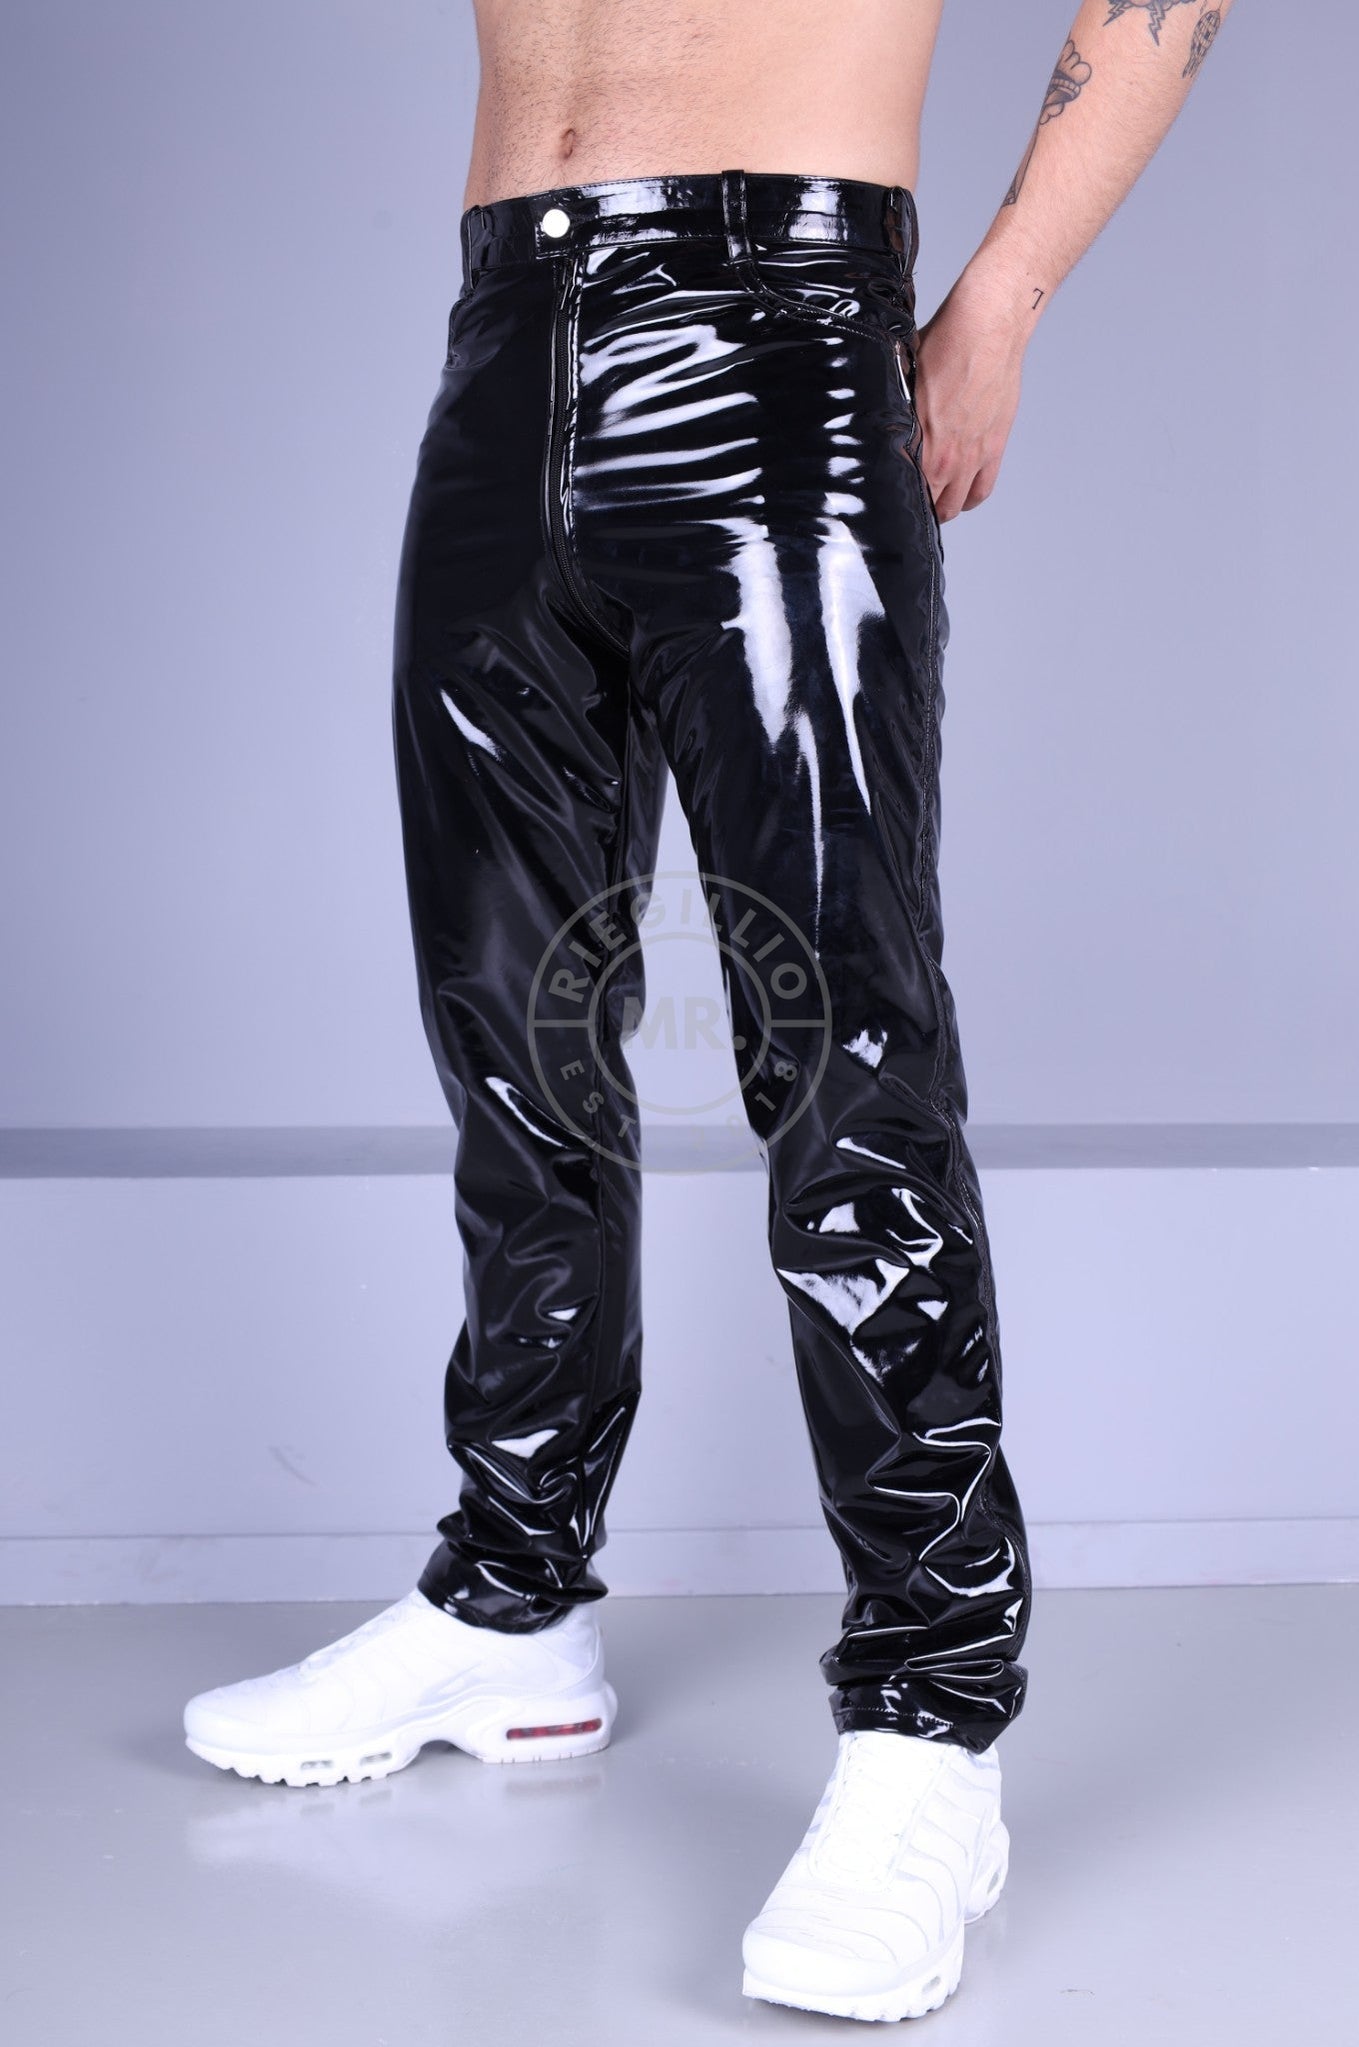 Black PVC Pants - Thru Zip-at MR. Riegillio